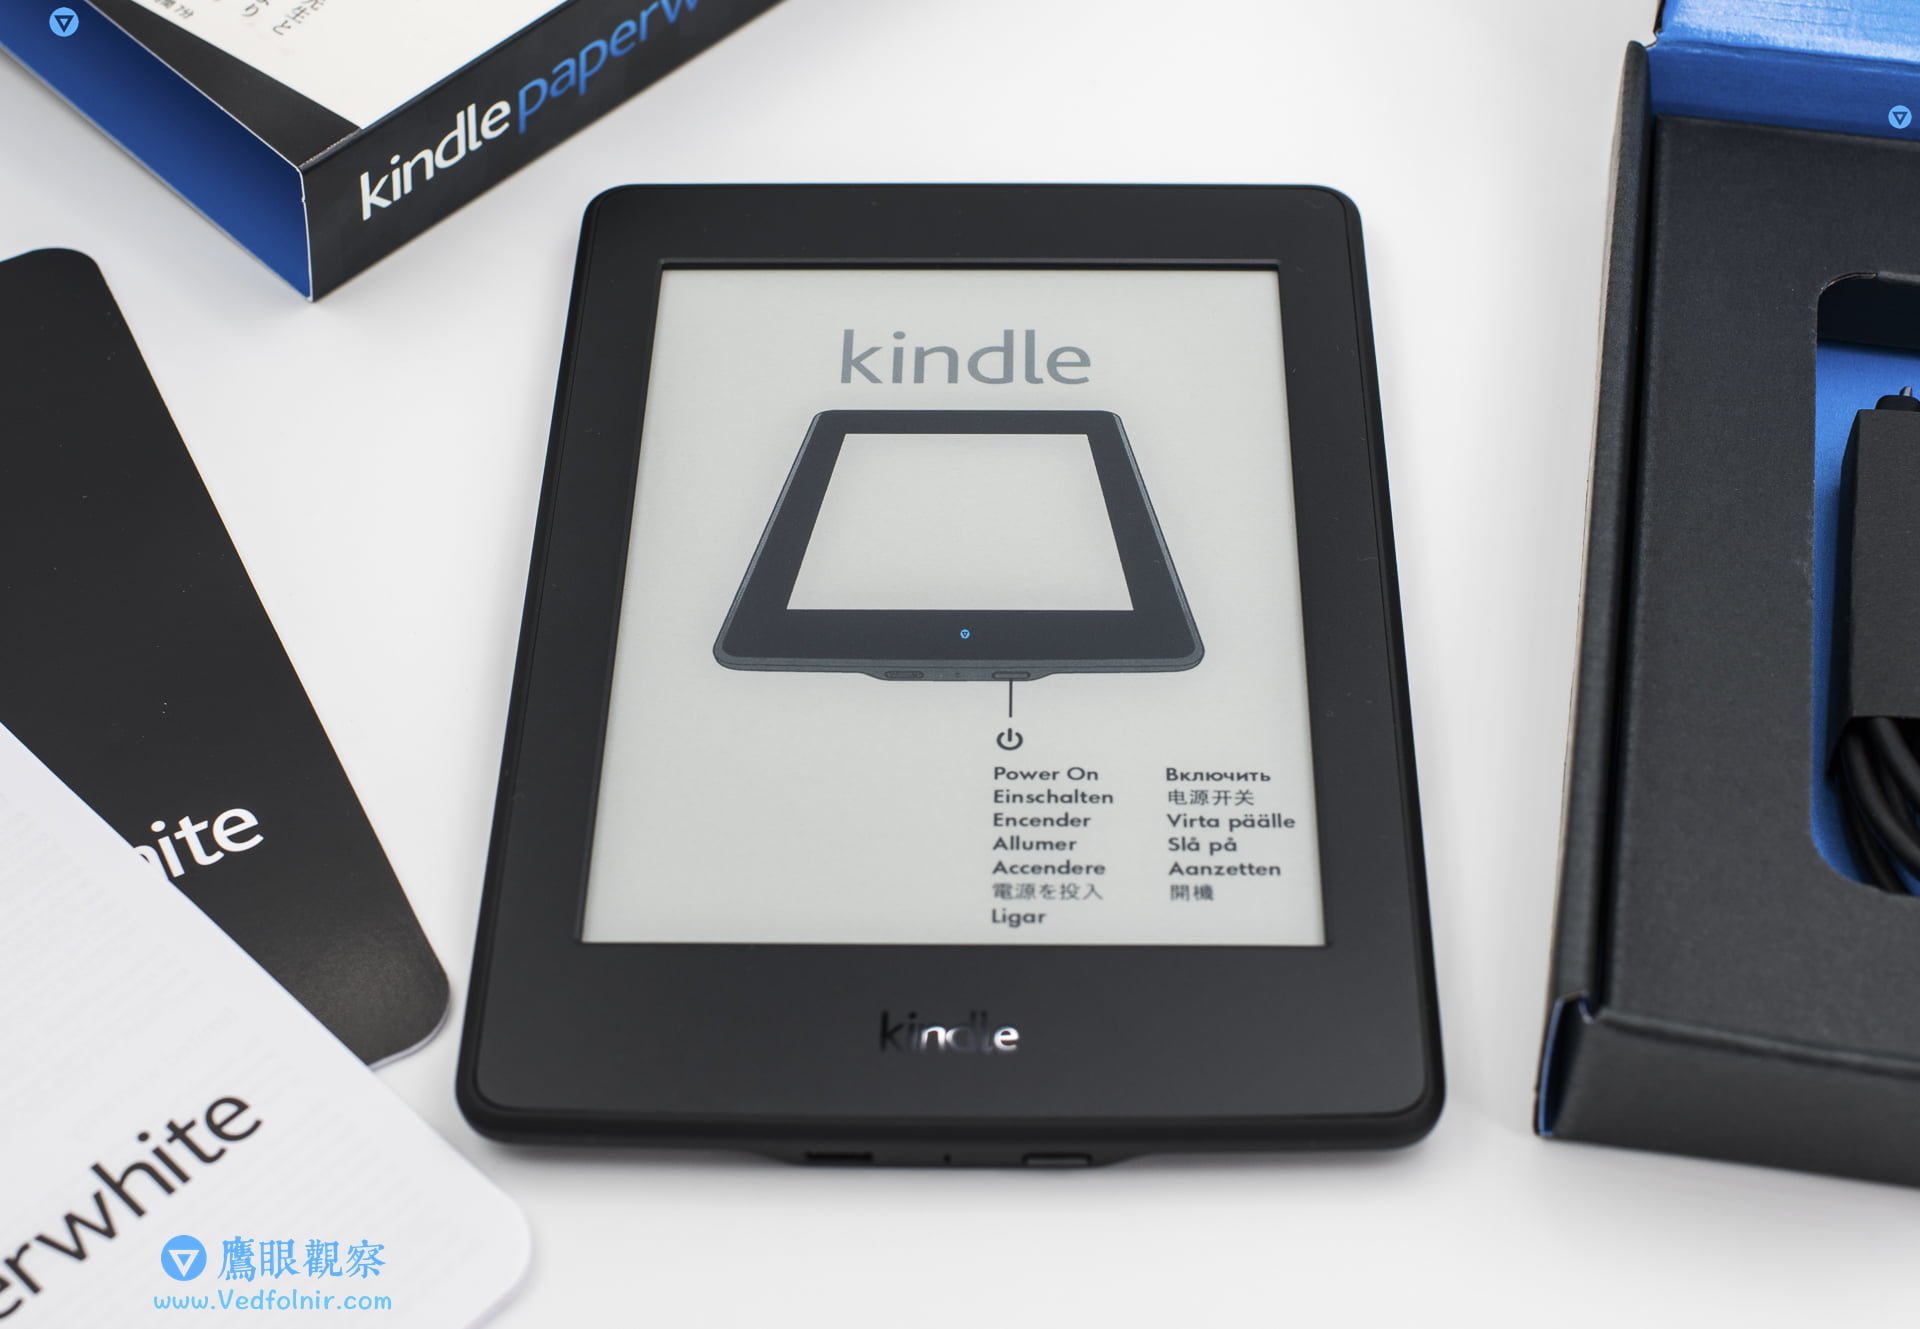 Amazon Kindle 電子閱讀器特價 49 美金 Black Friday 黑色星期五優惠促銷專案